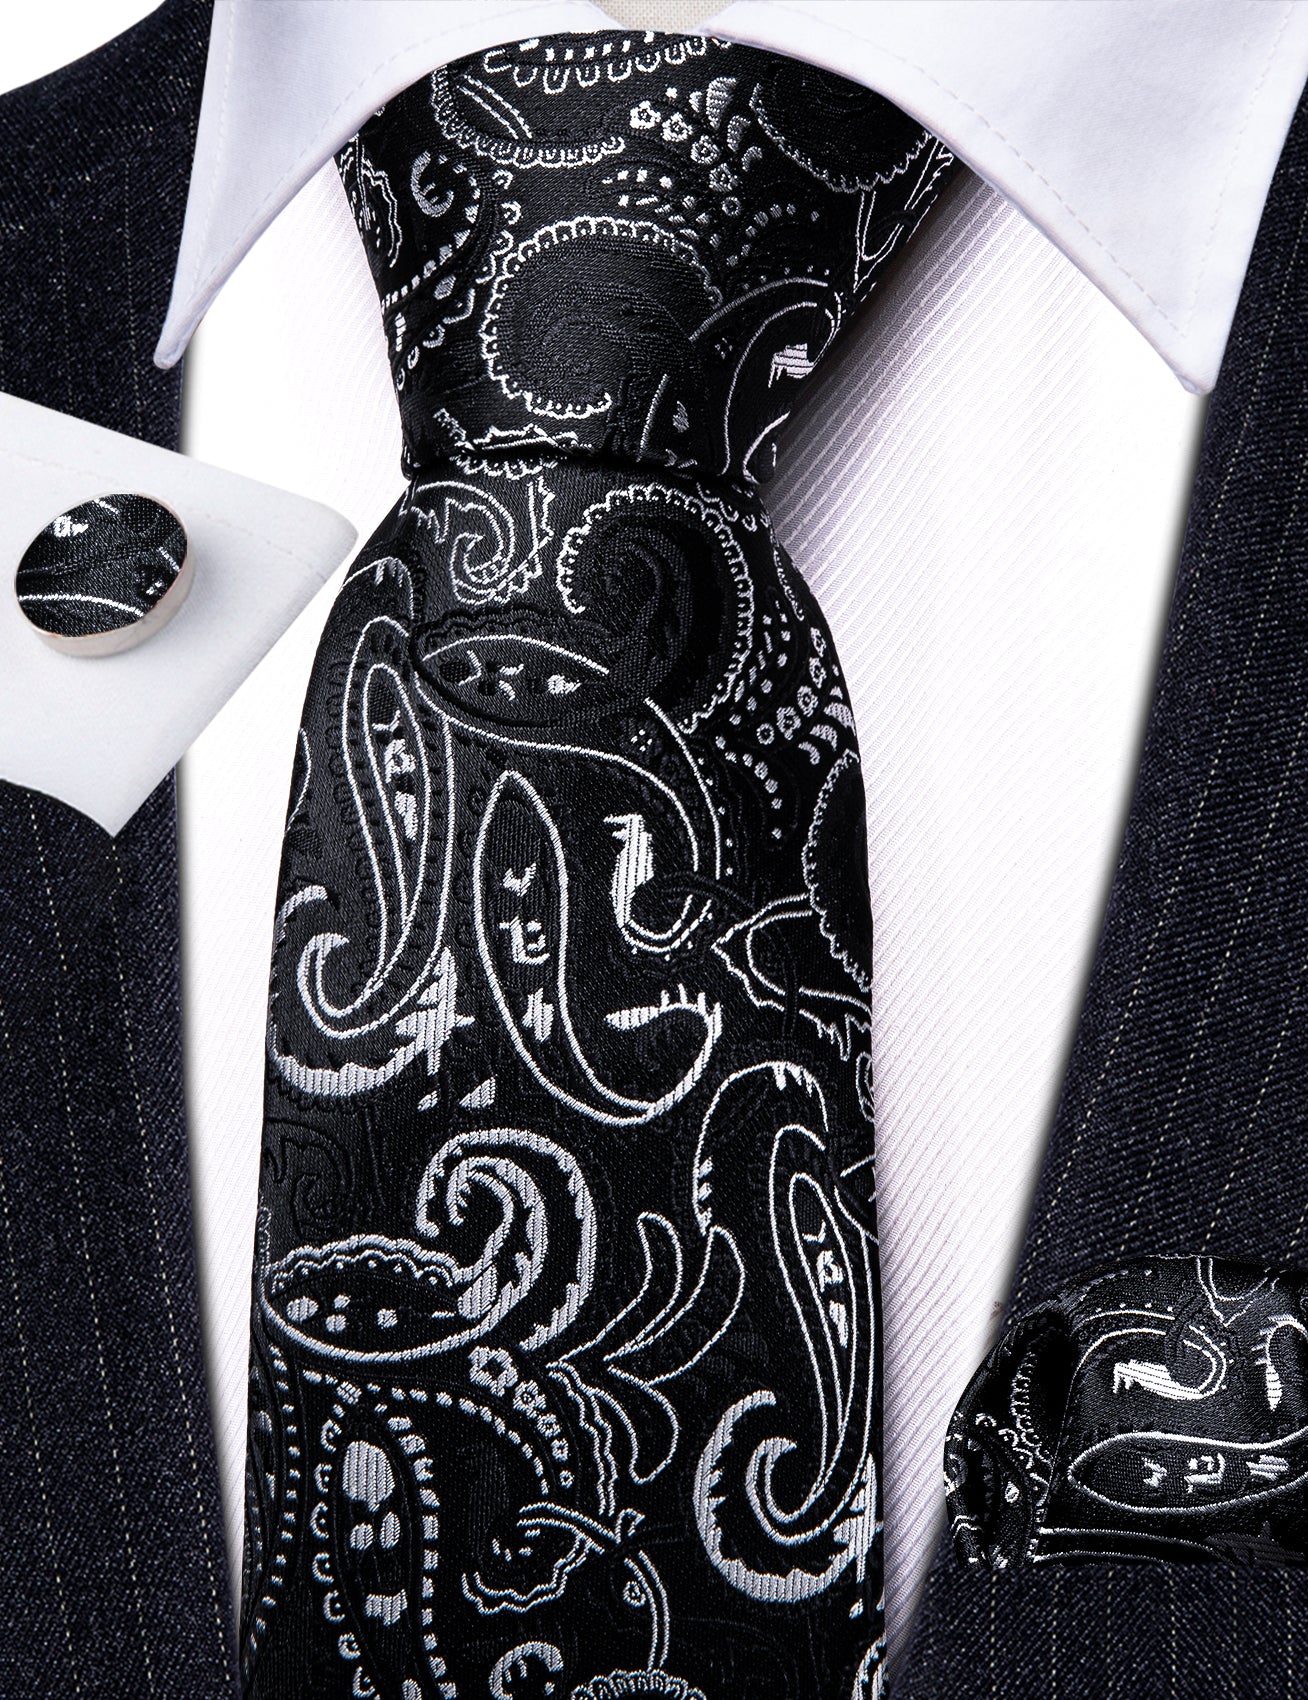 Barry.wang Floral Tie Black White Paisley Silk Tie Hanky Cufflinks Set